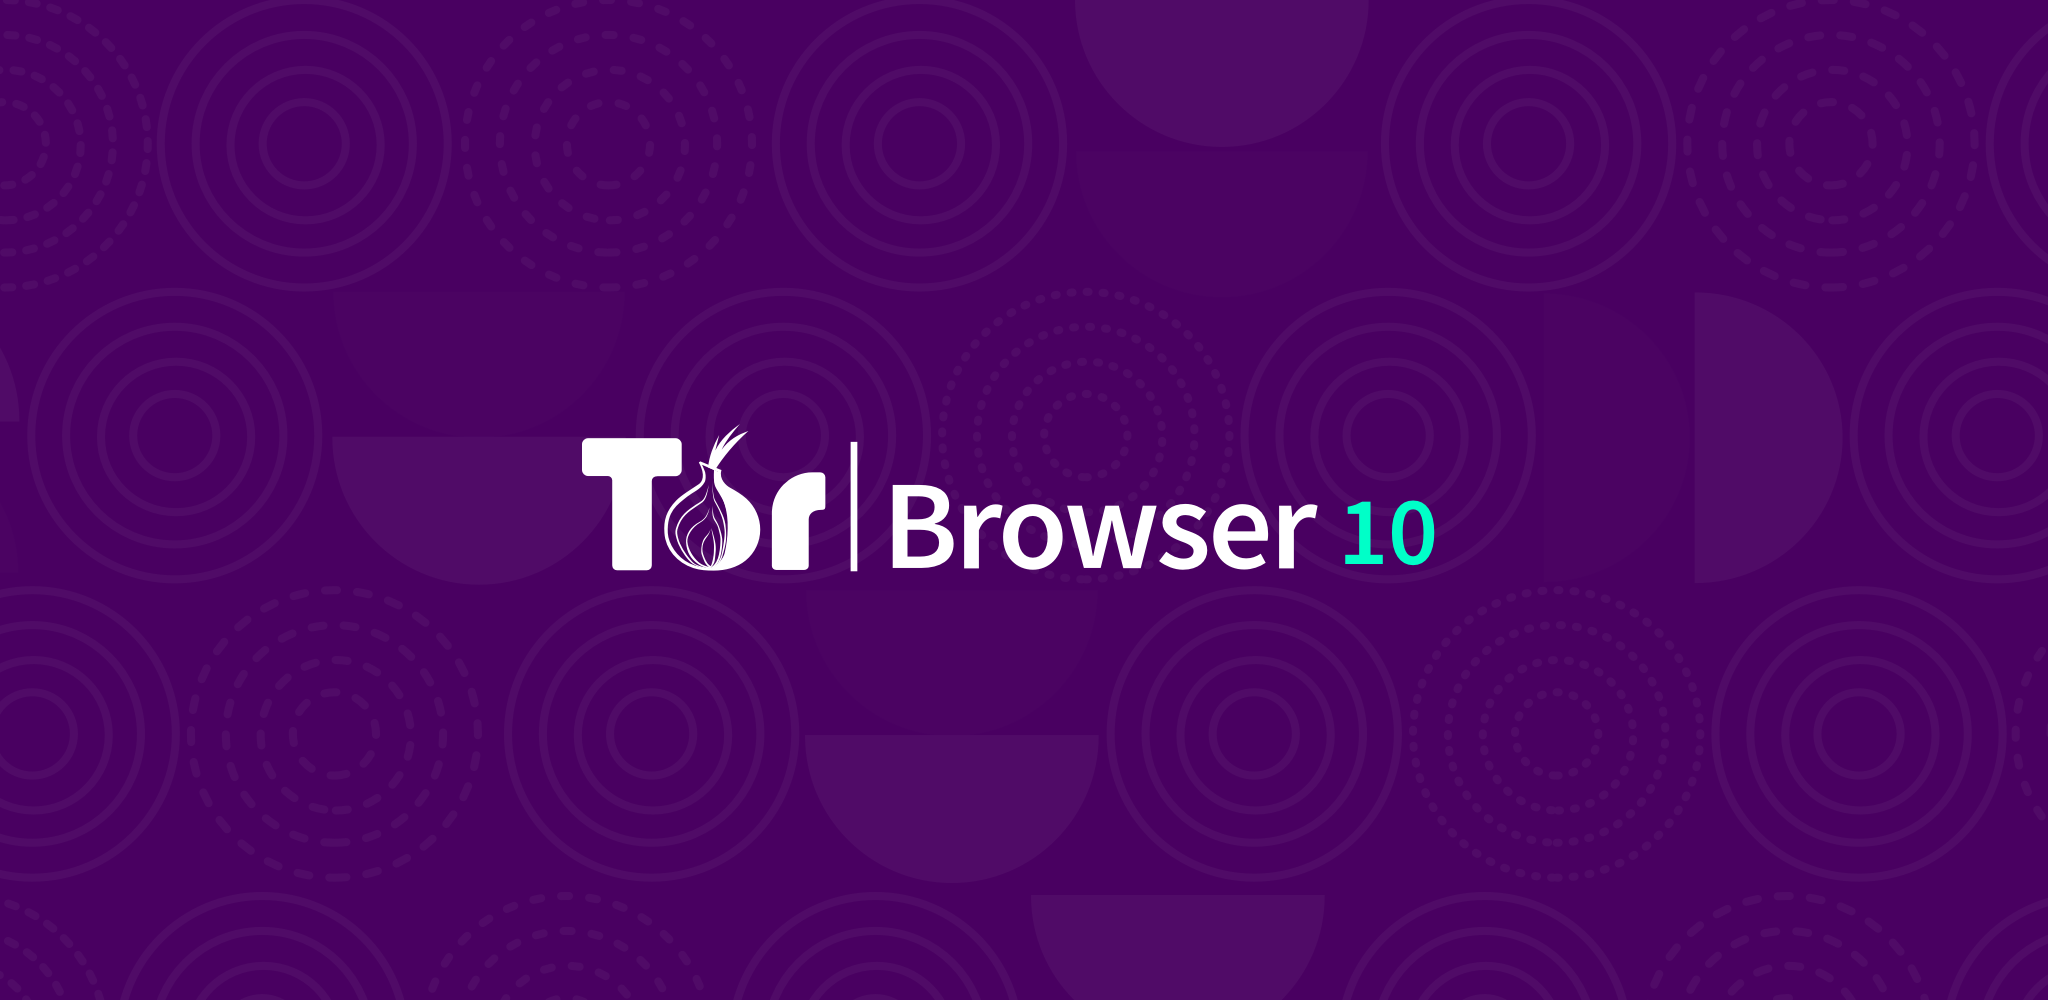 Tor browser 10 hydra2web лента про даркнет гидра